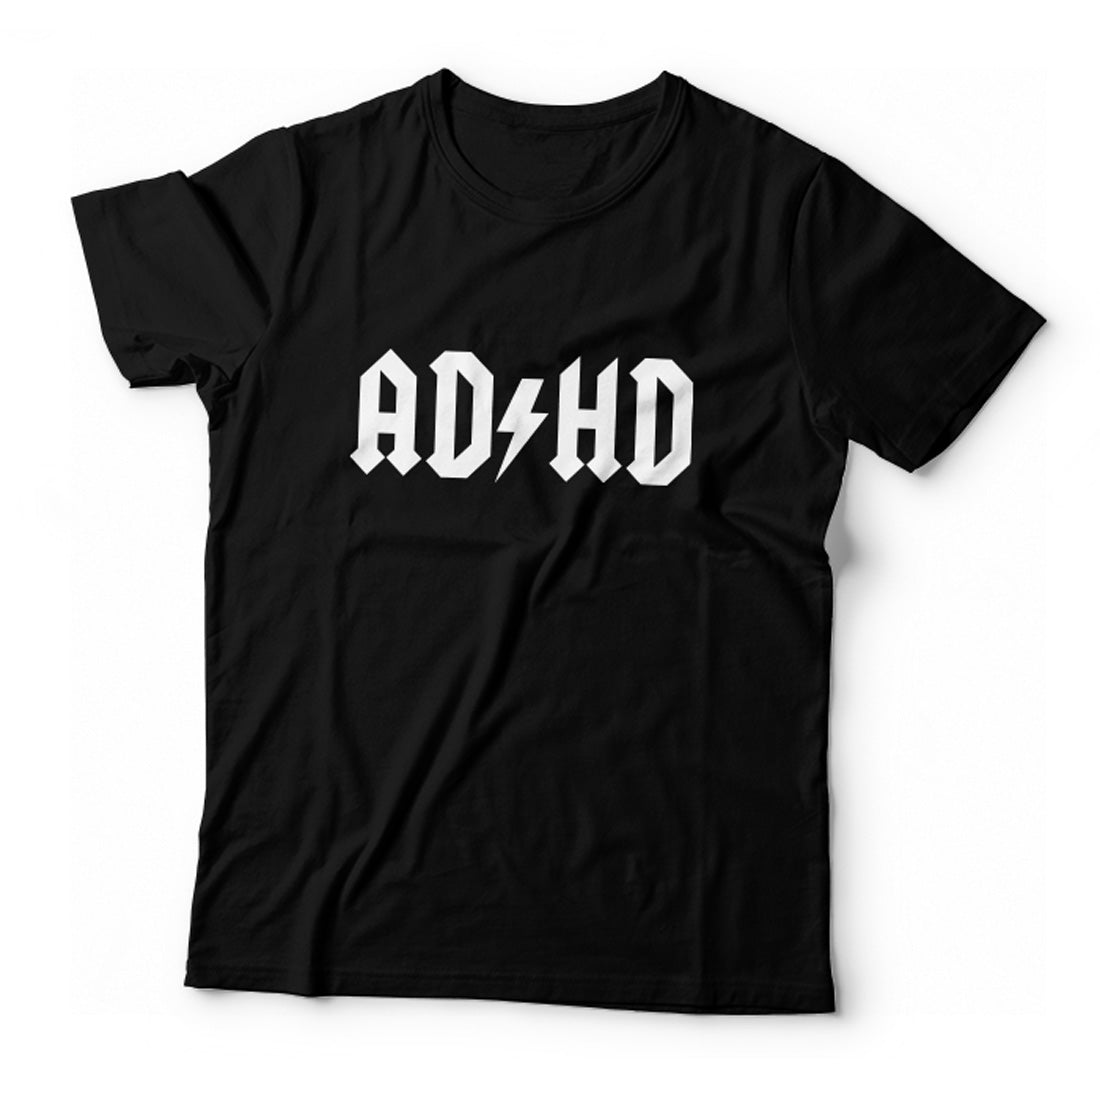 AD/HD T-Skjorte - By Higren